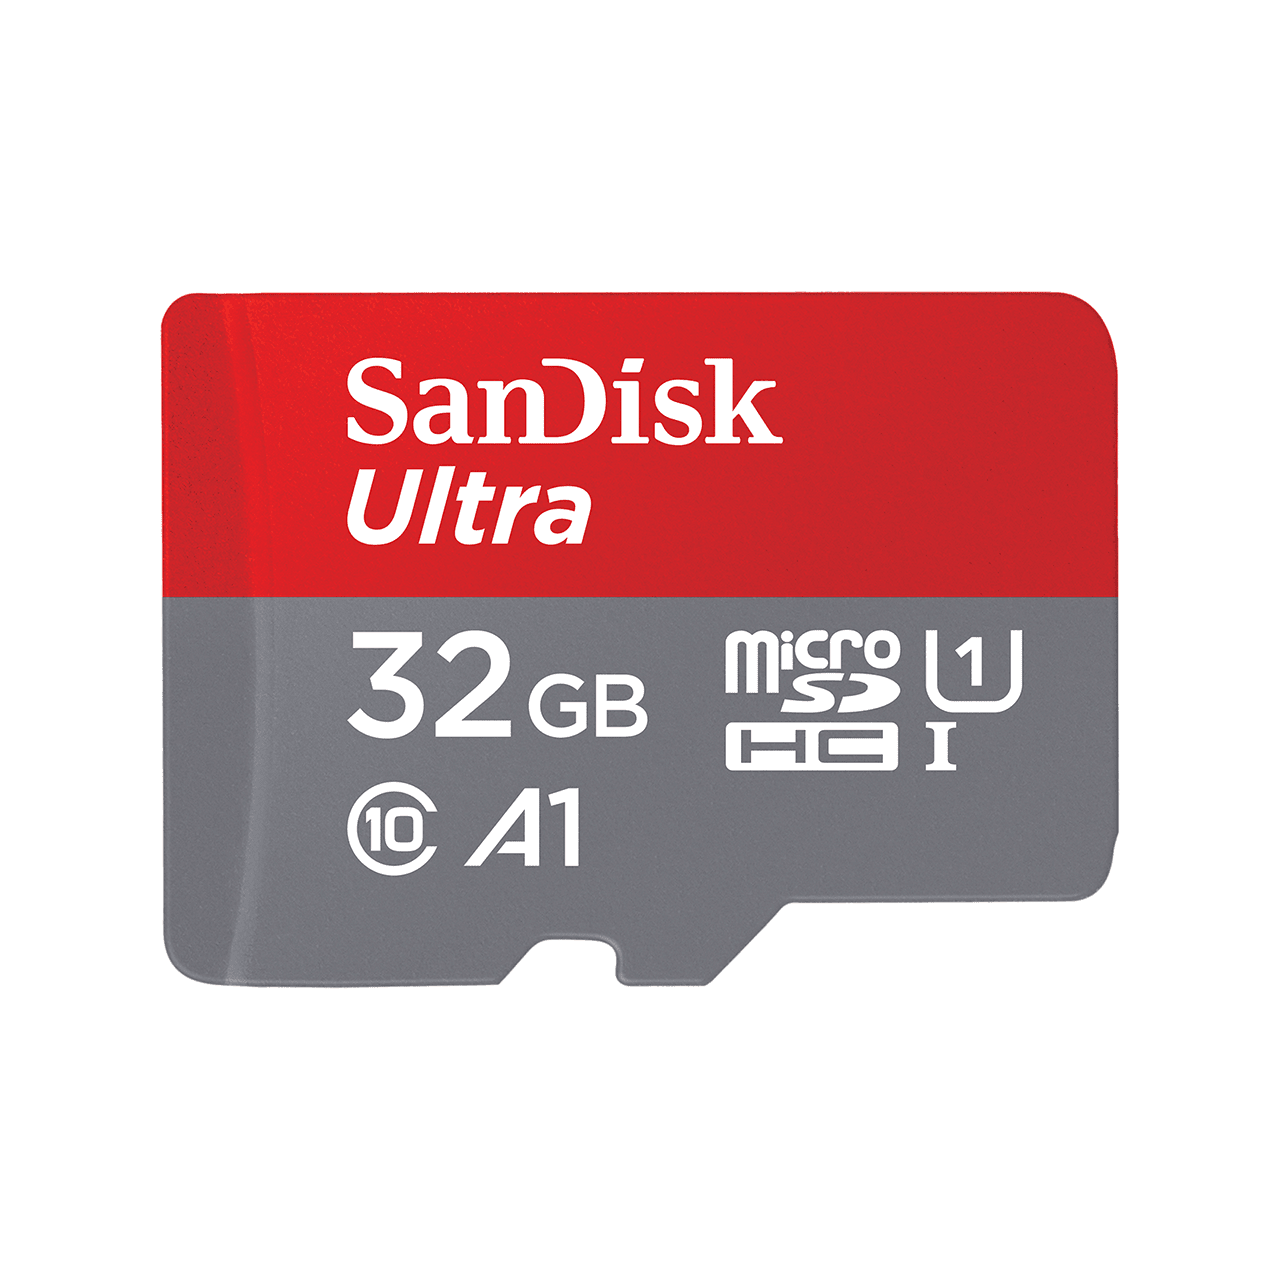 Sandisk Ultra 32GB Micro SD Memory Card